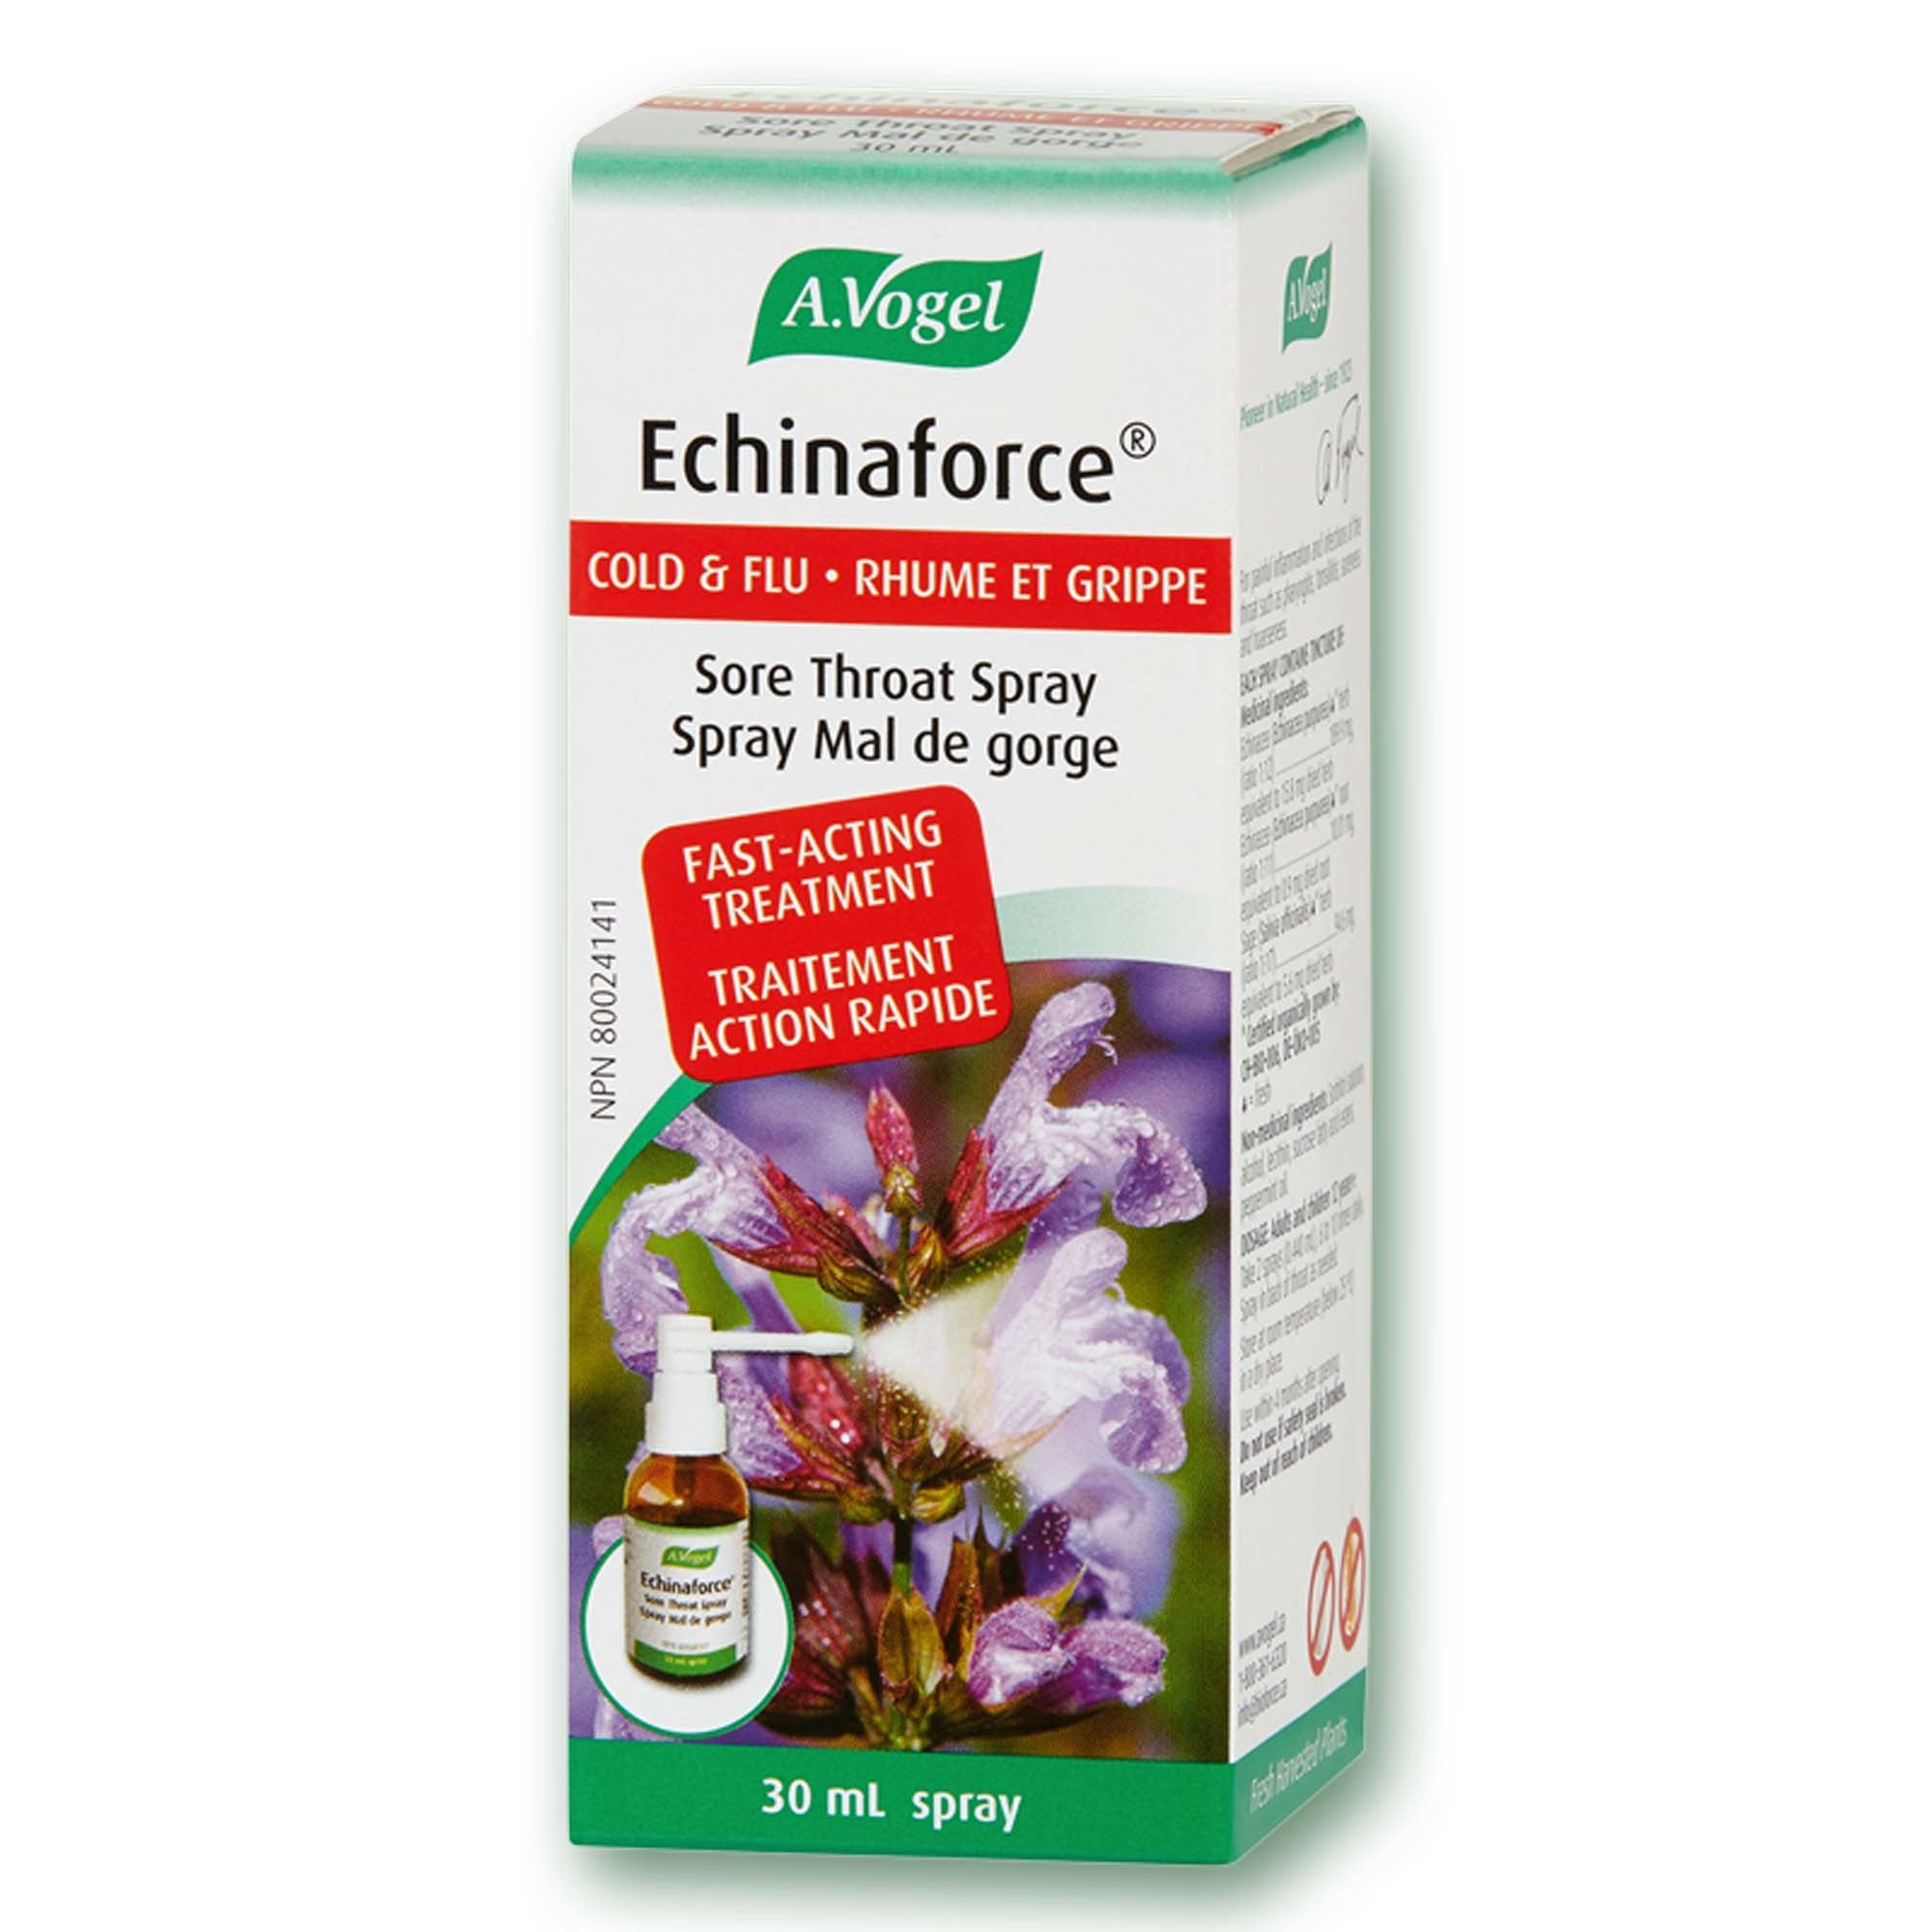 A.Vogel - Echinaforce Sore Throat Spray - 30ml